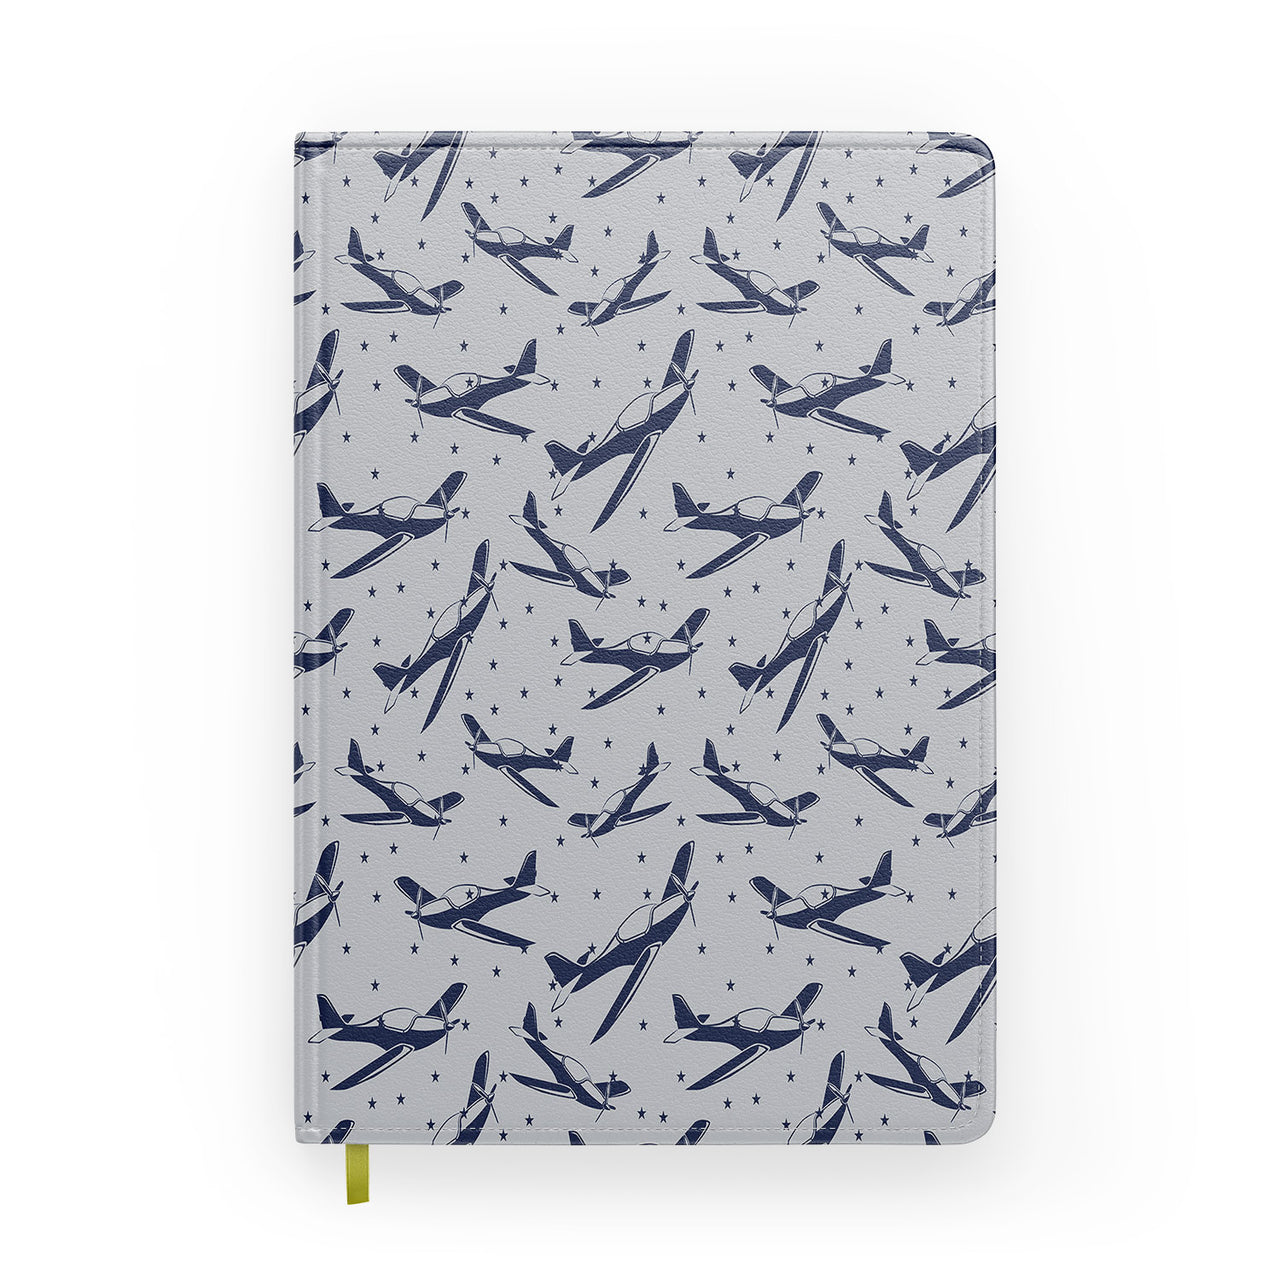 Propellers & Stars Designed Notebooks